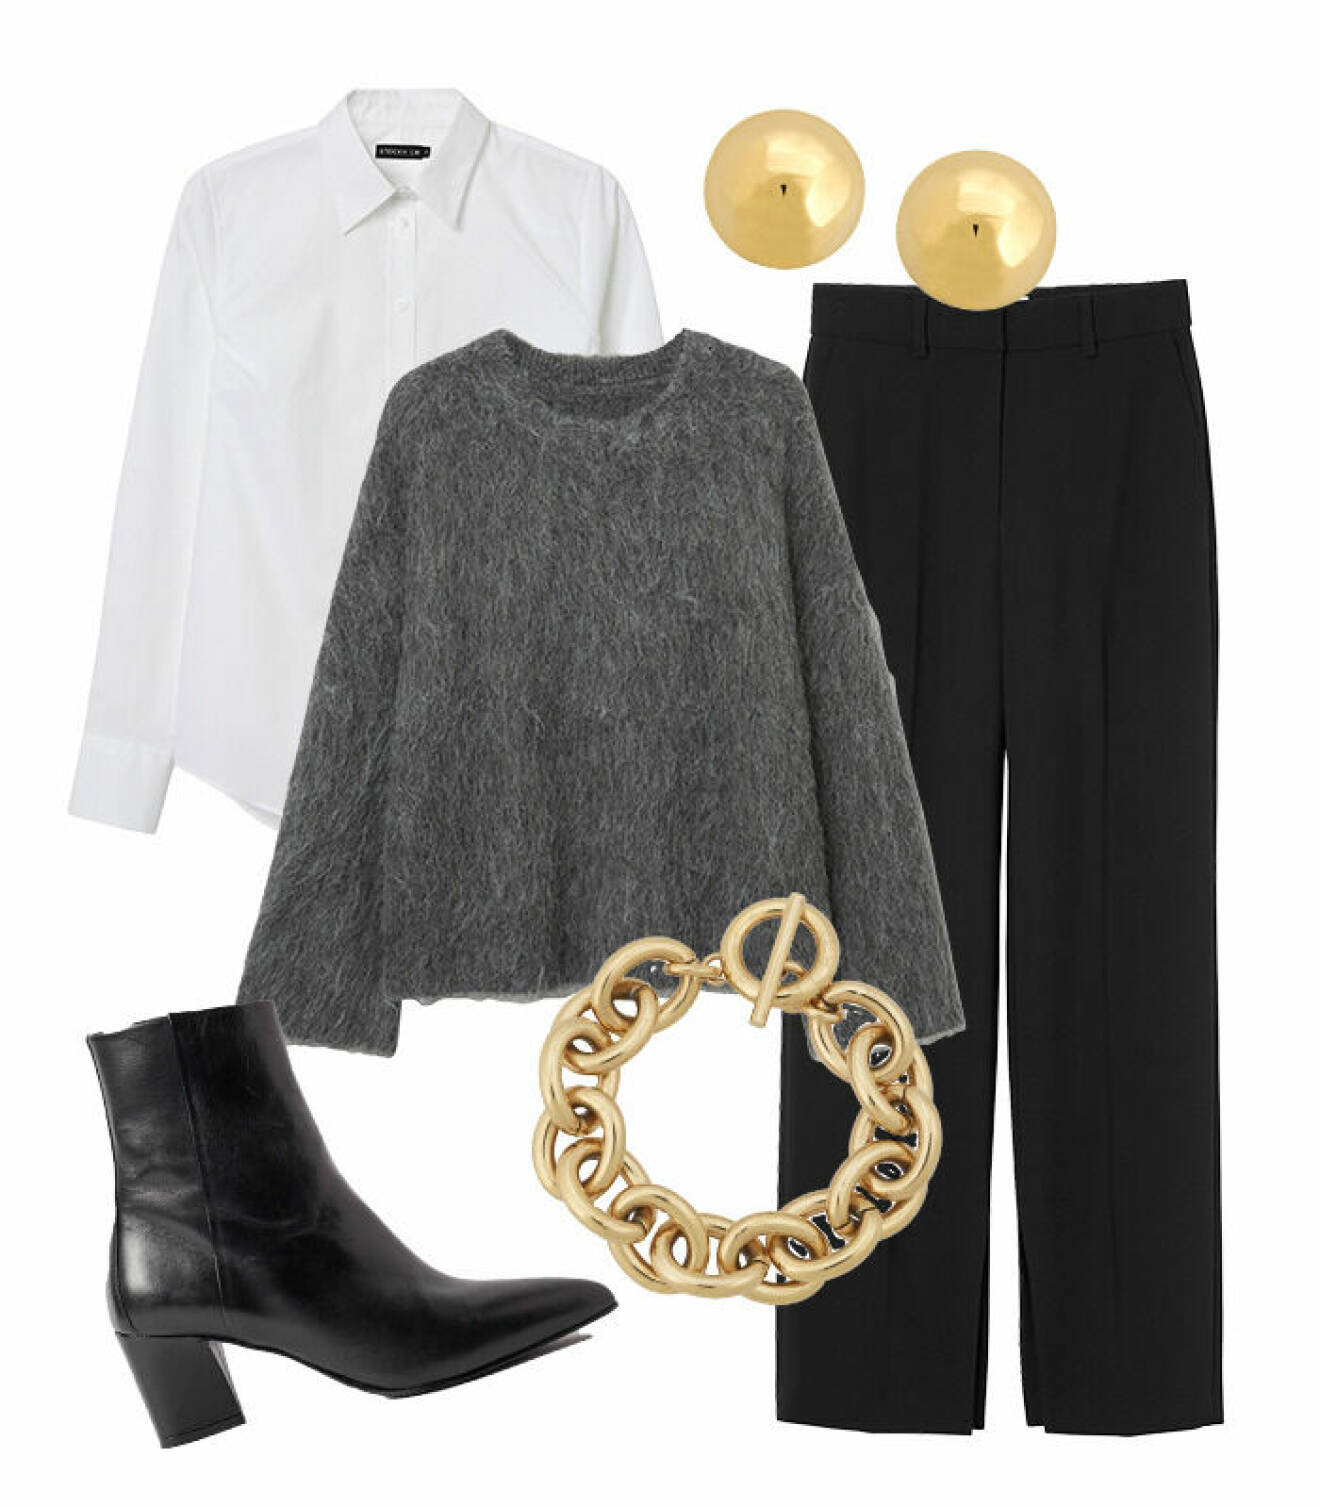 höst mode styling tips trender MQ stickat set grå svart kostymbyxa skjorta